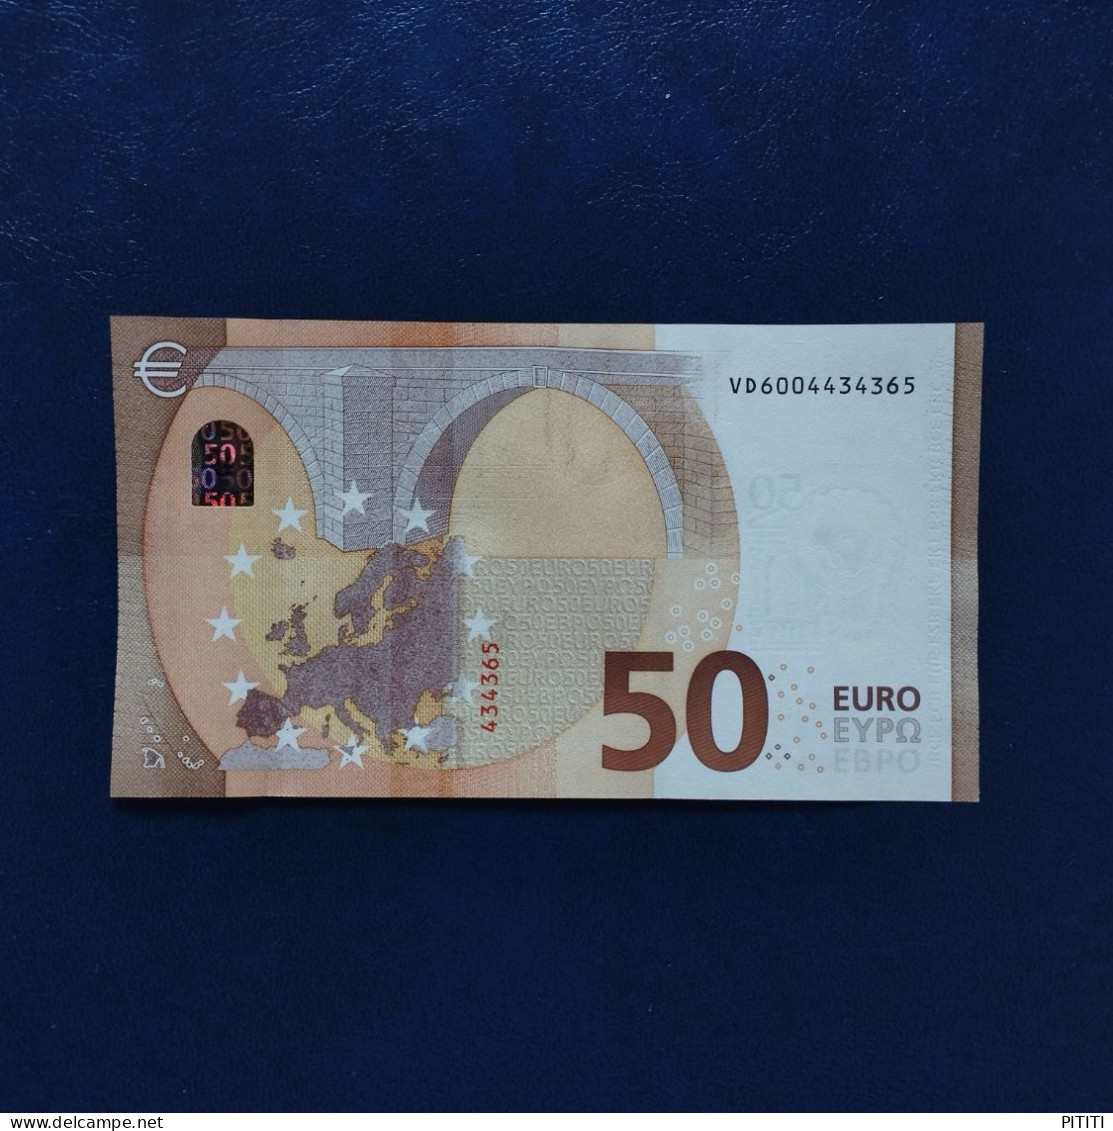 EURO SPAIN 50 V033A1 VD LAGARDE UNC, PAIR CORRELATIVE RADAR2 - 50 Euro